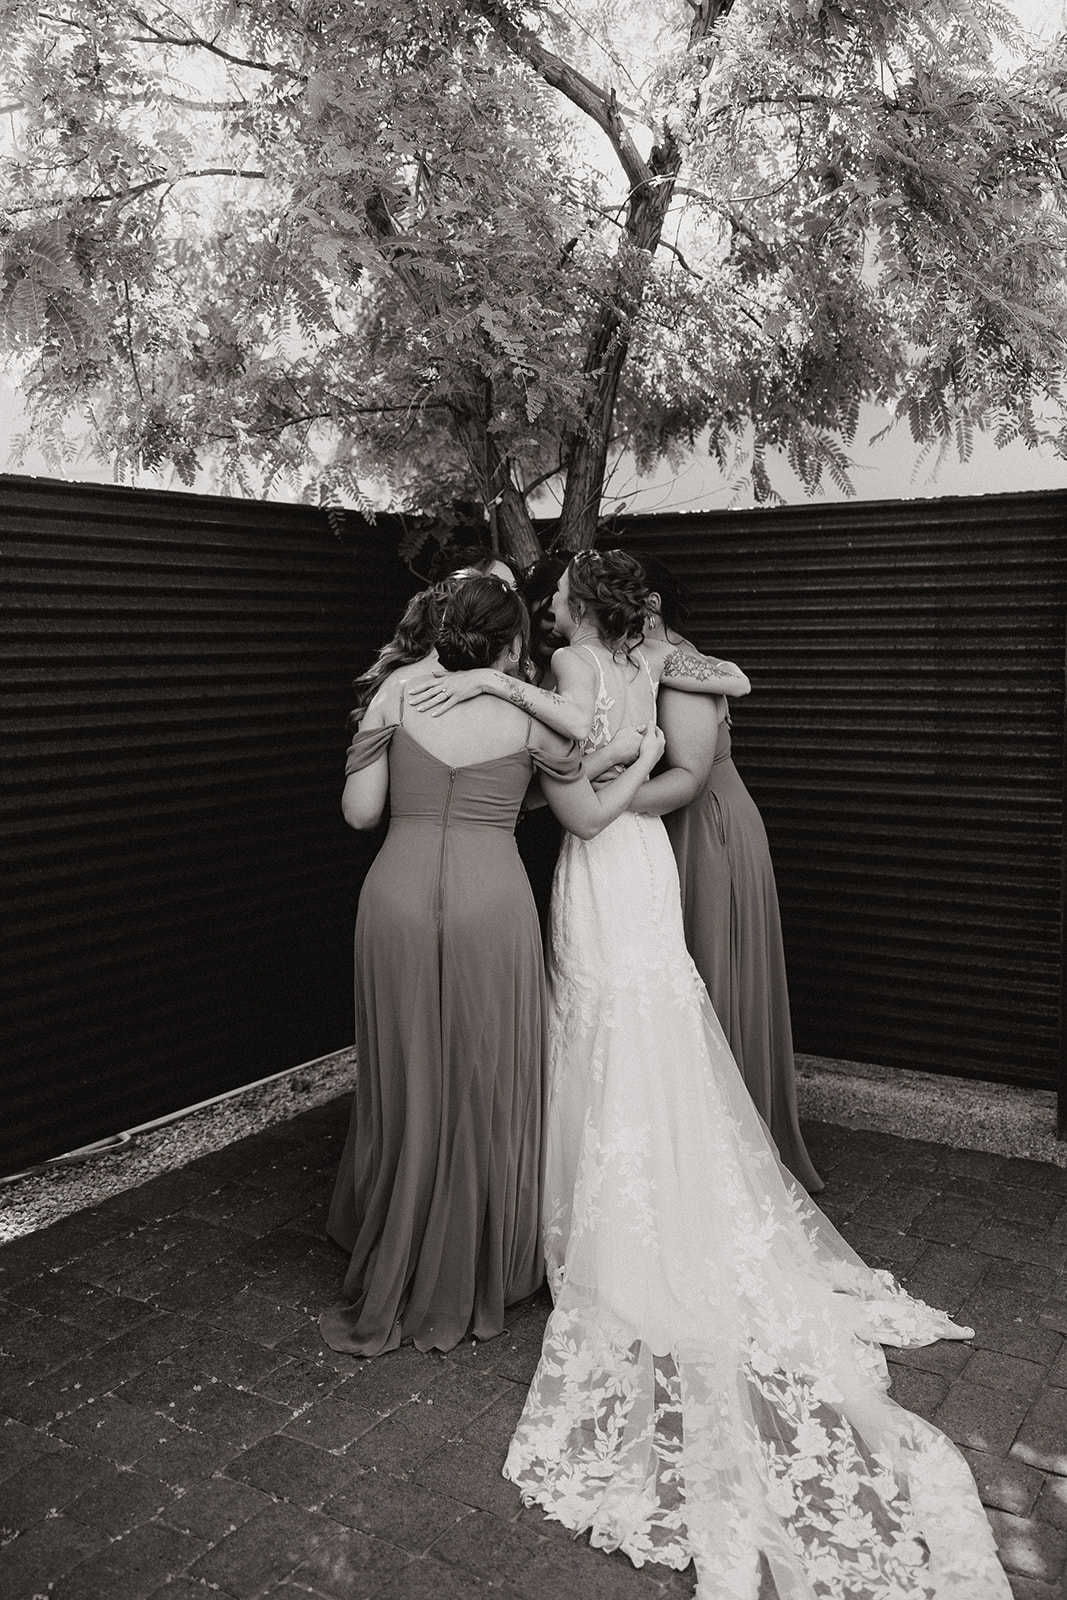 First look photos between a beautiful bride and her bridesmaids 